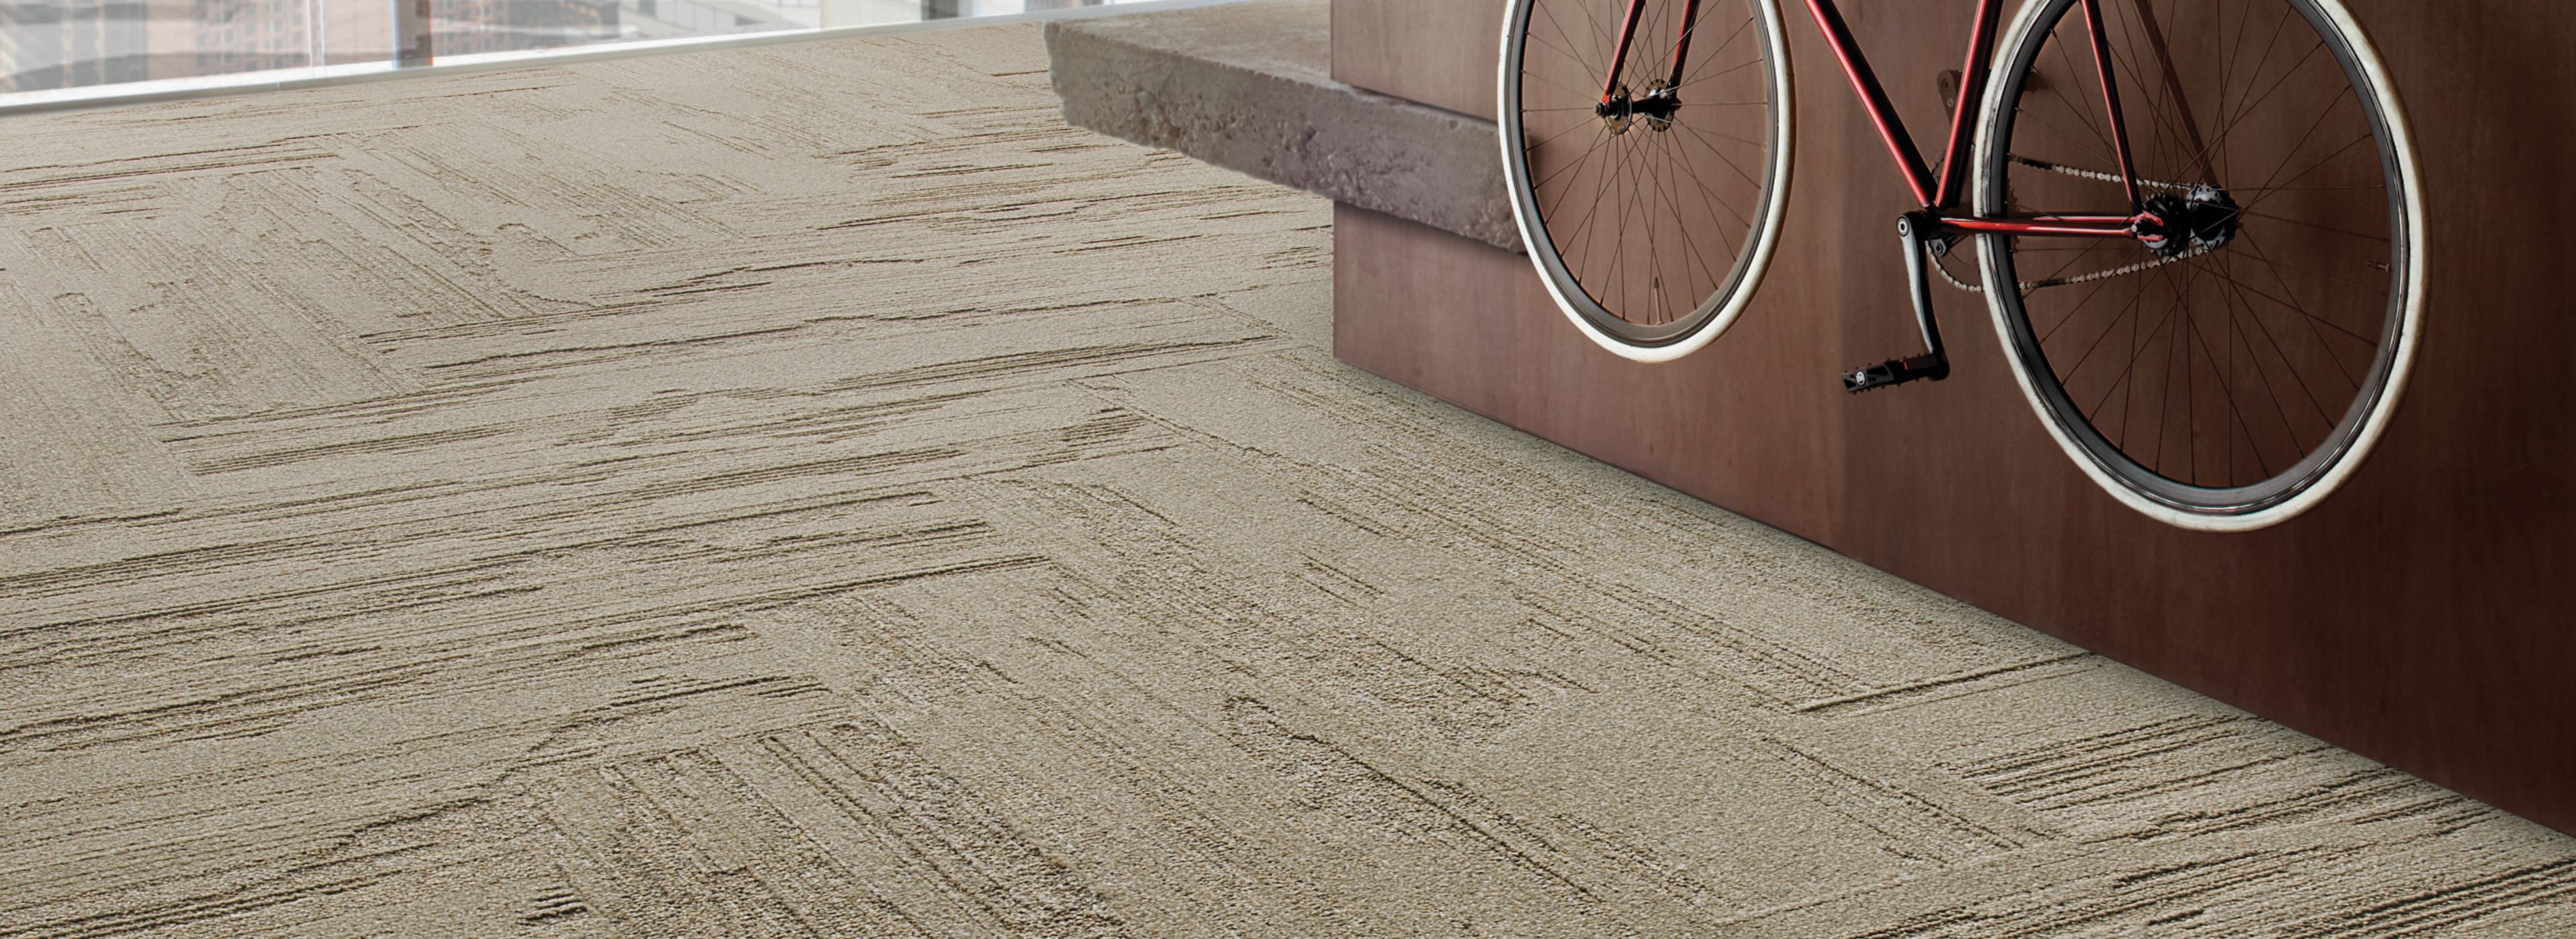 image Interface UR501 plank carpet tile in office common area with bike  numéro 1